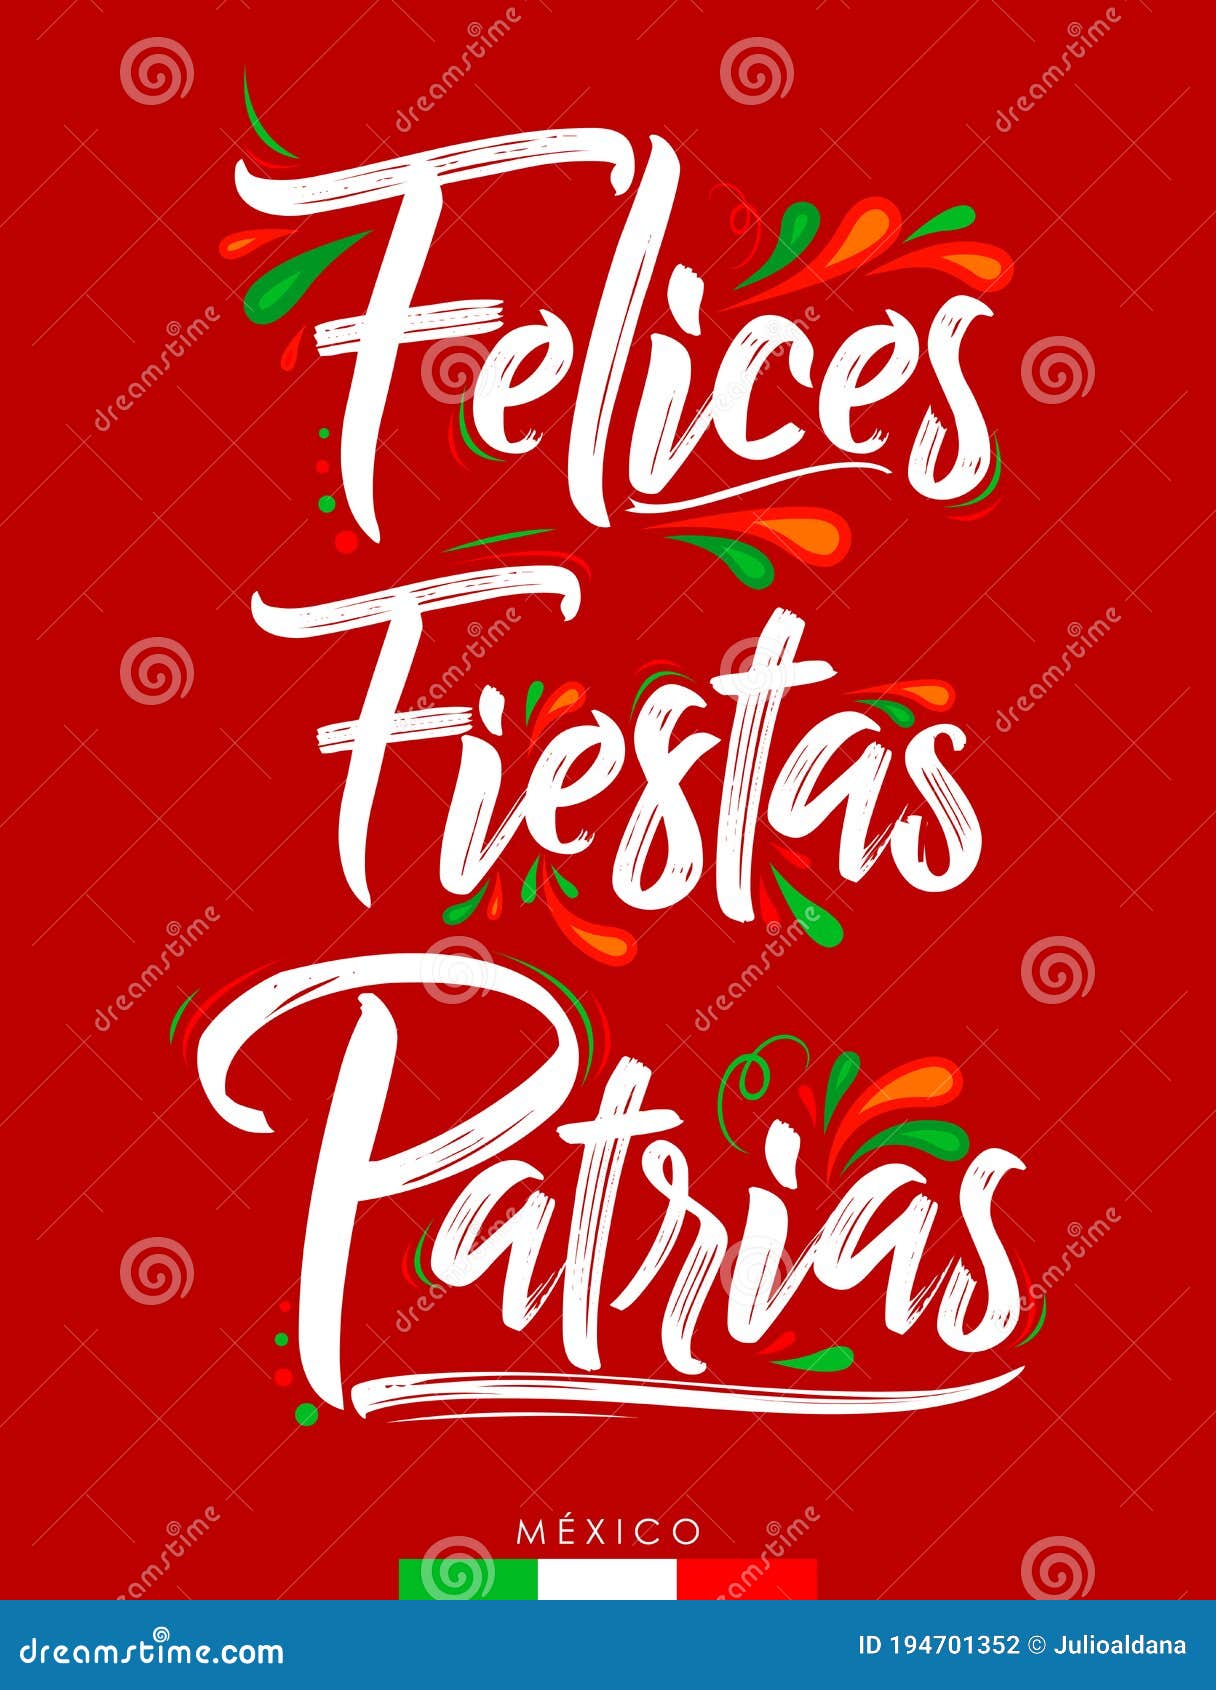 felices fiestas patrias, happy national holidays spanish text, mexican theme patriotic celebration.